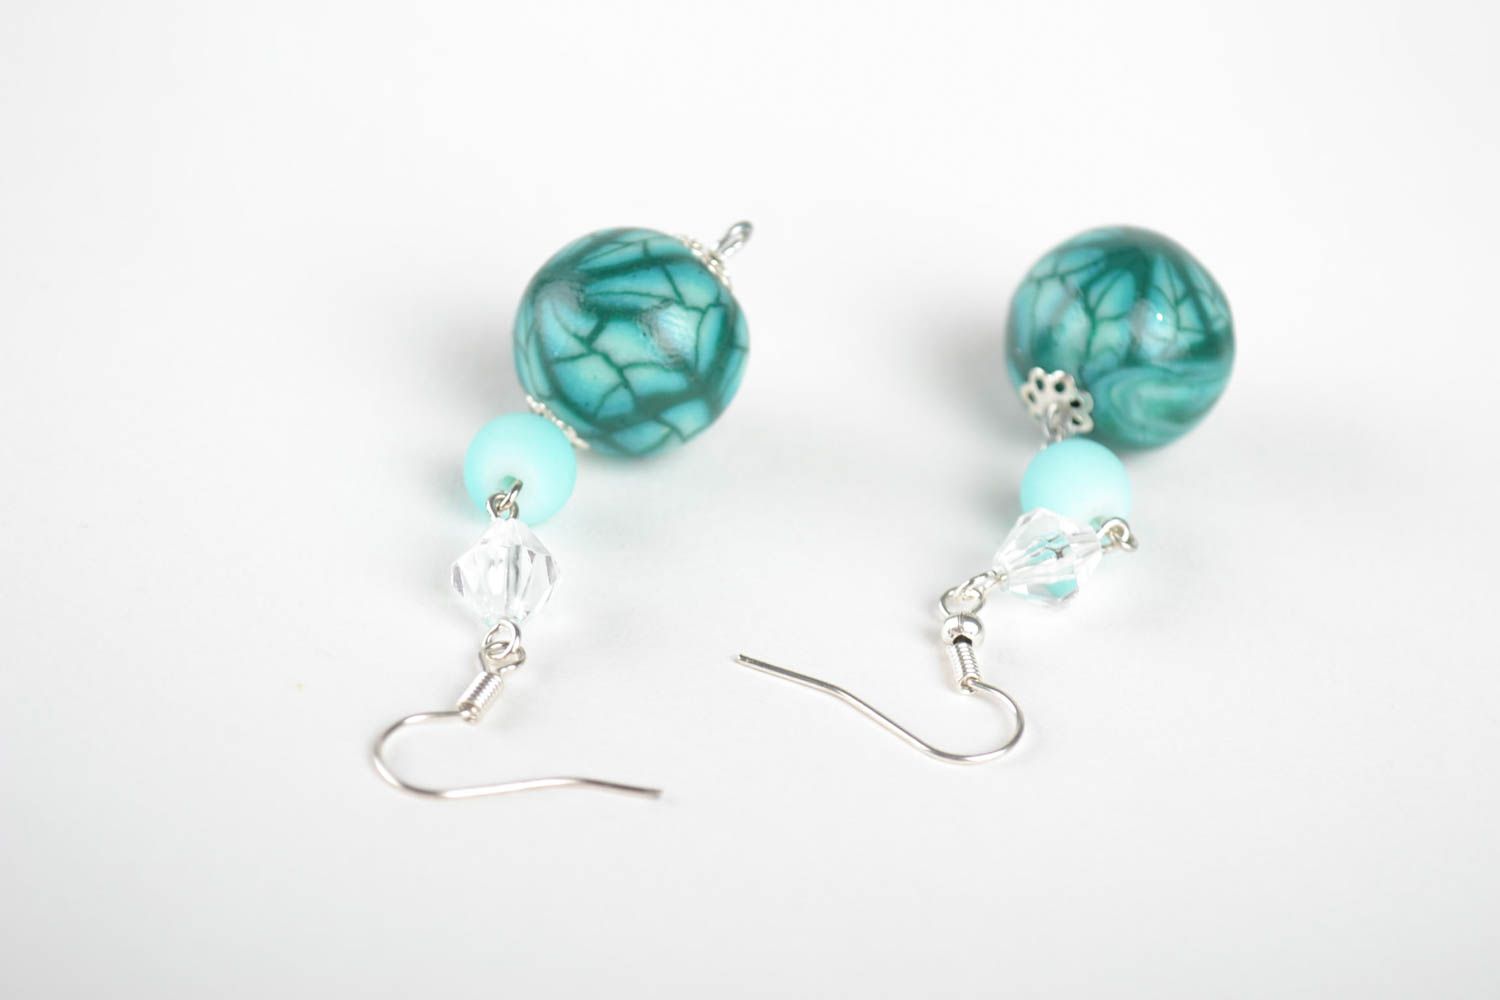 Ball earrings handmade earrings polymer clay jewelry gift ideas for girl photo 4